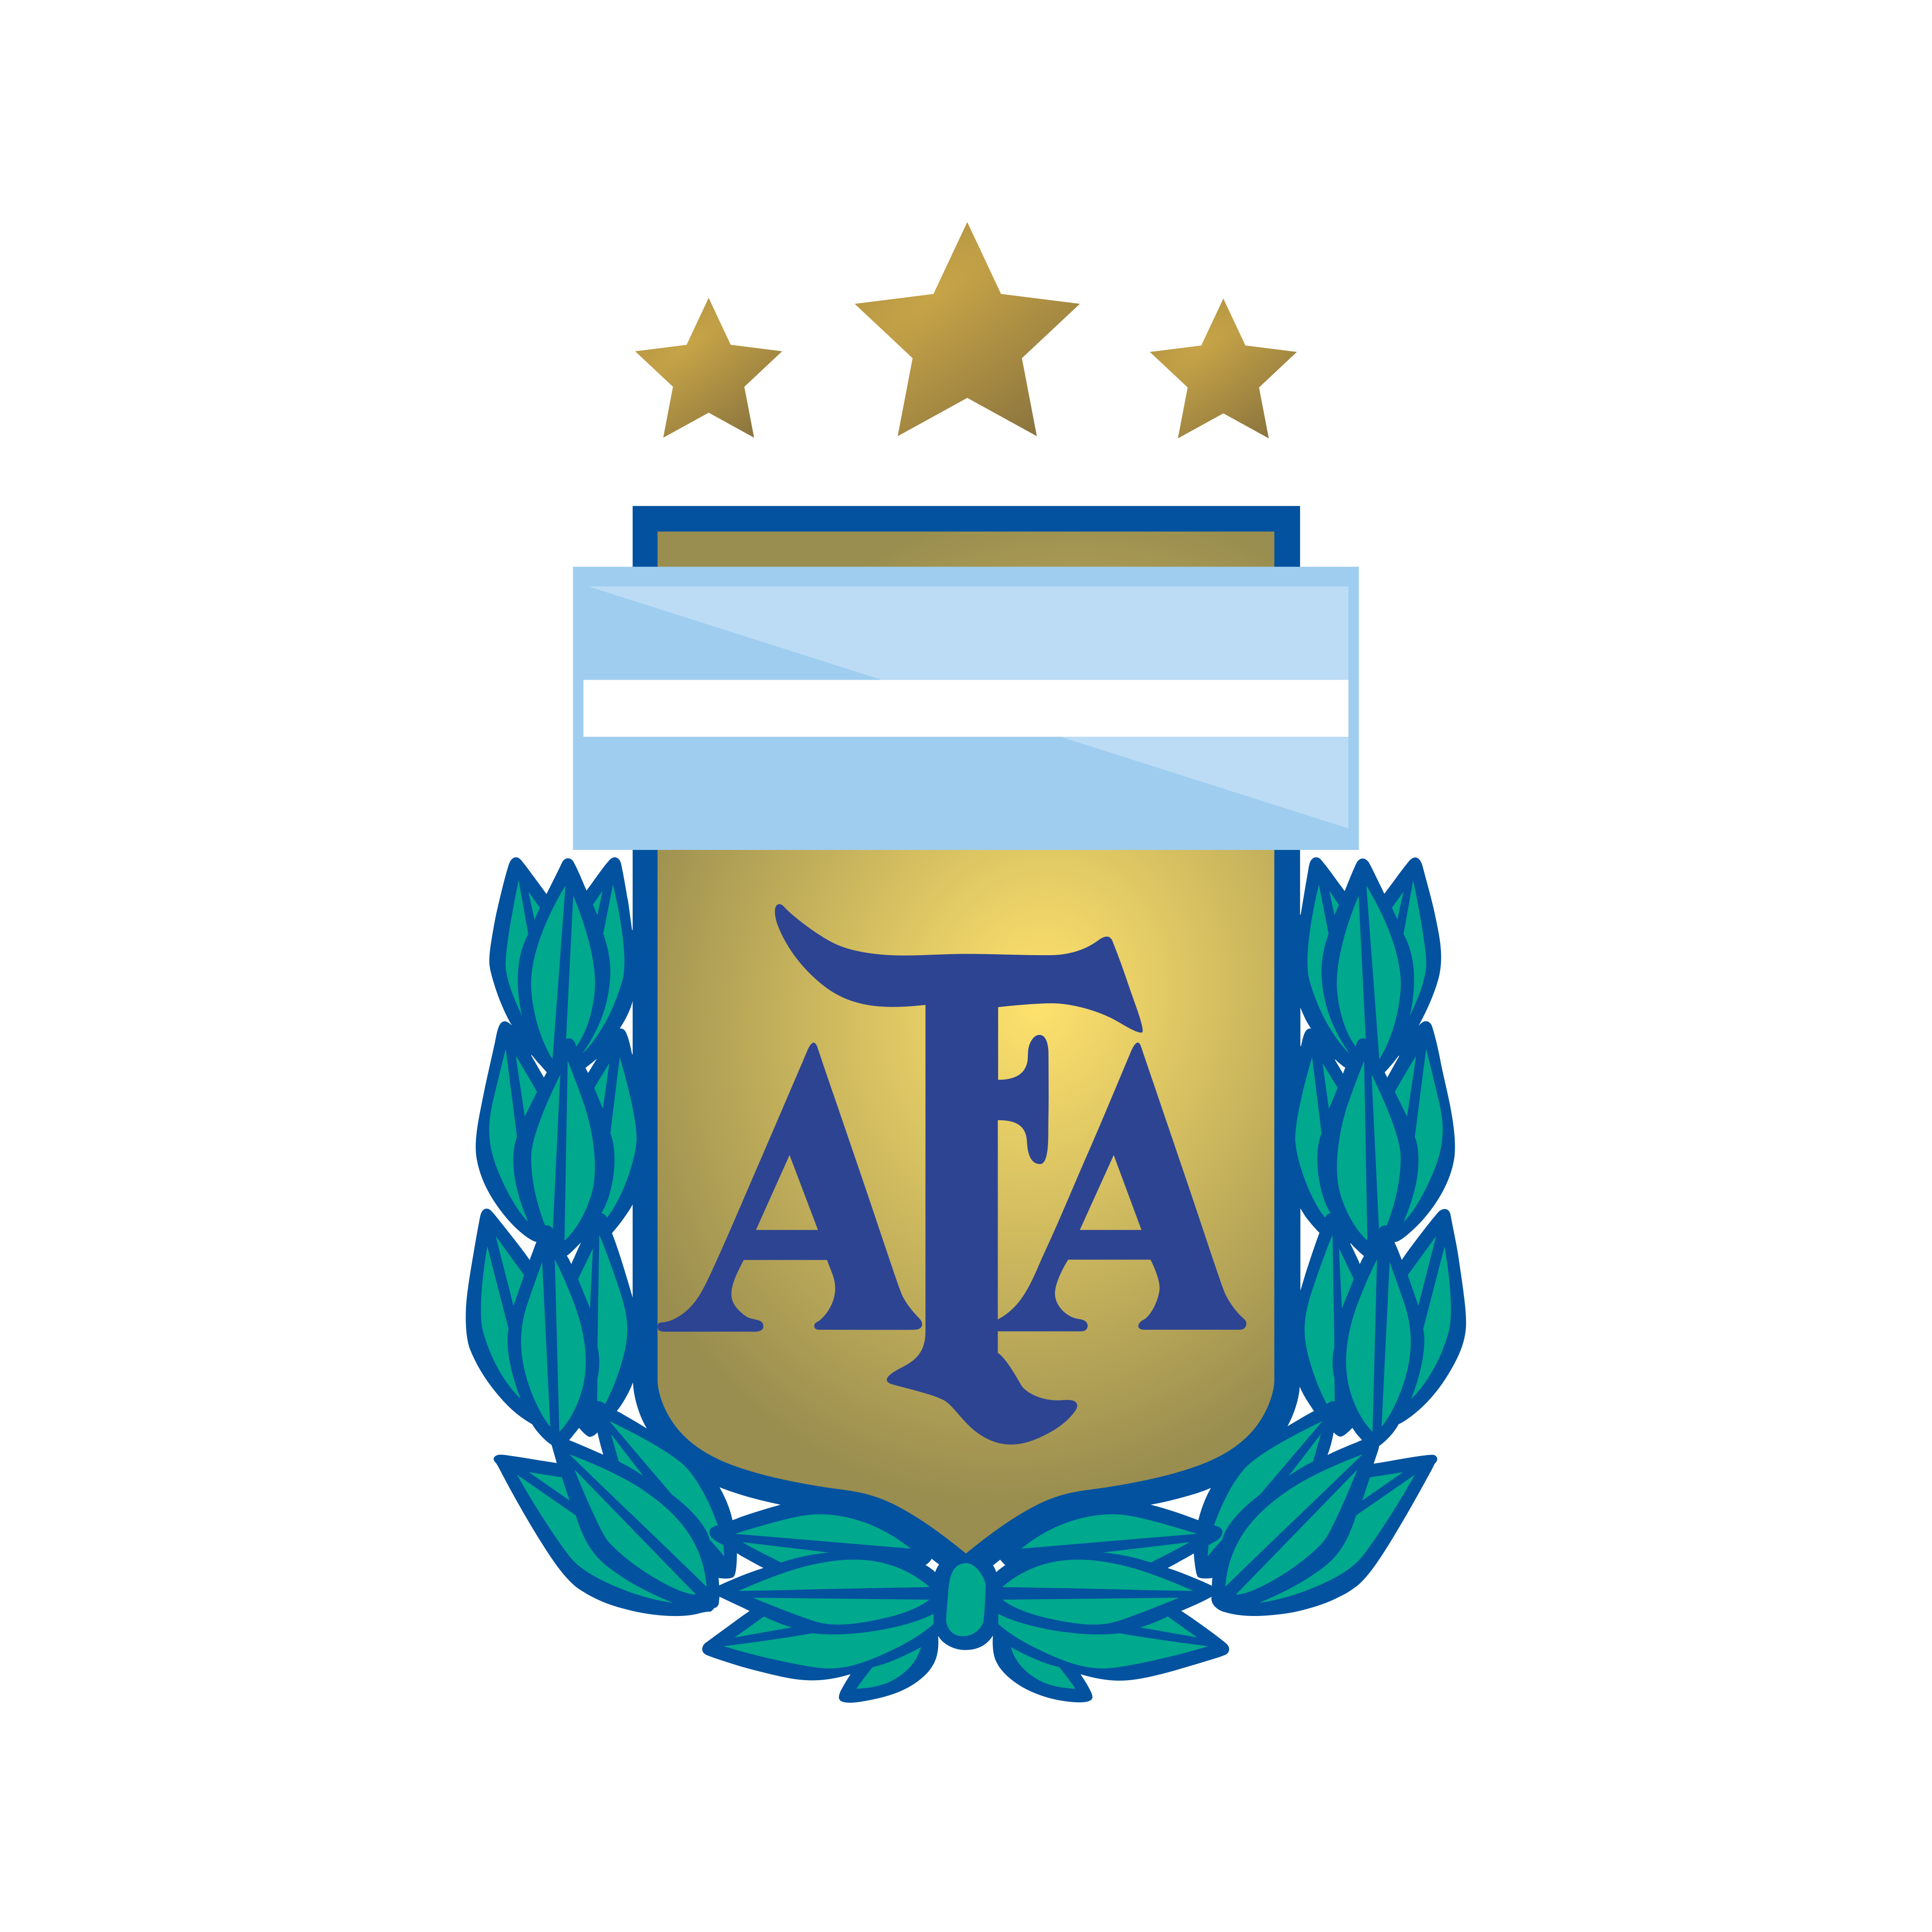 argentina national football team logo 0 1 - AFA Logo - Argentina National Football Team Logo